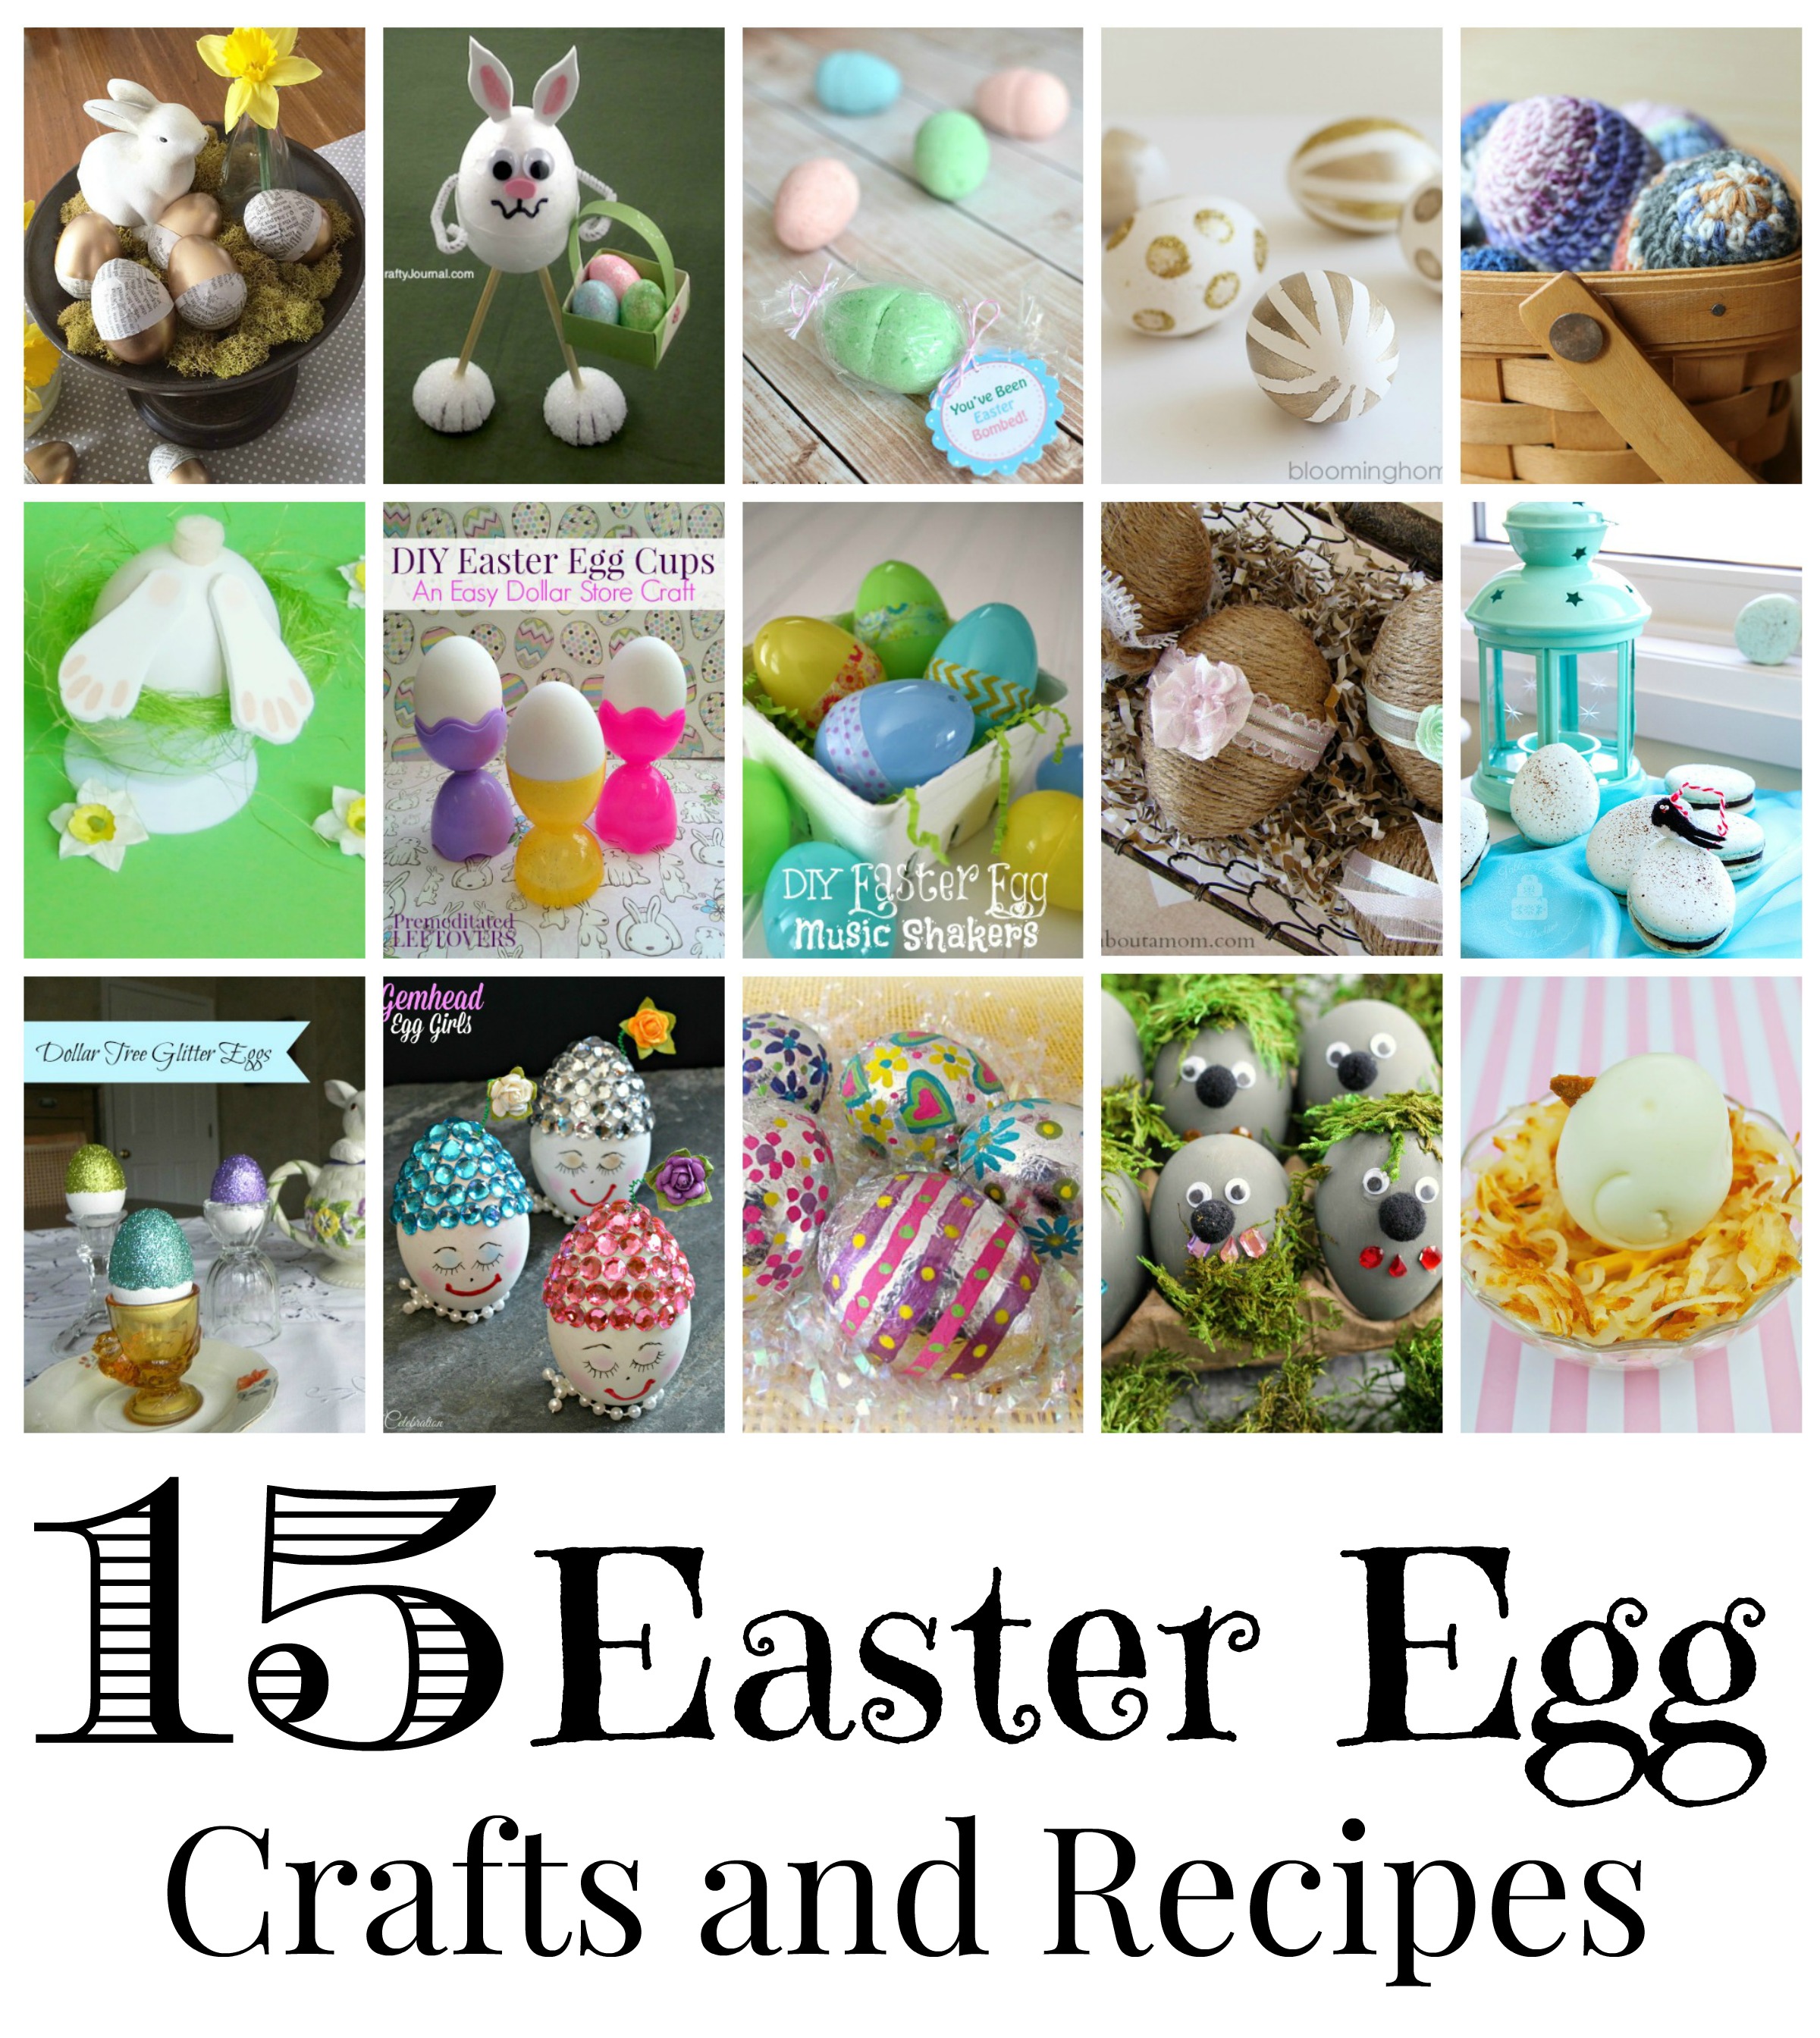 15 Easter Egg Crafts & Recipes